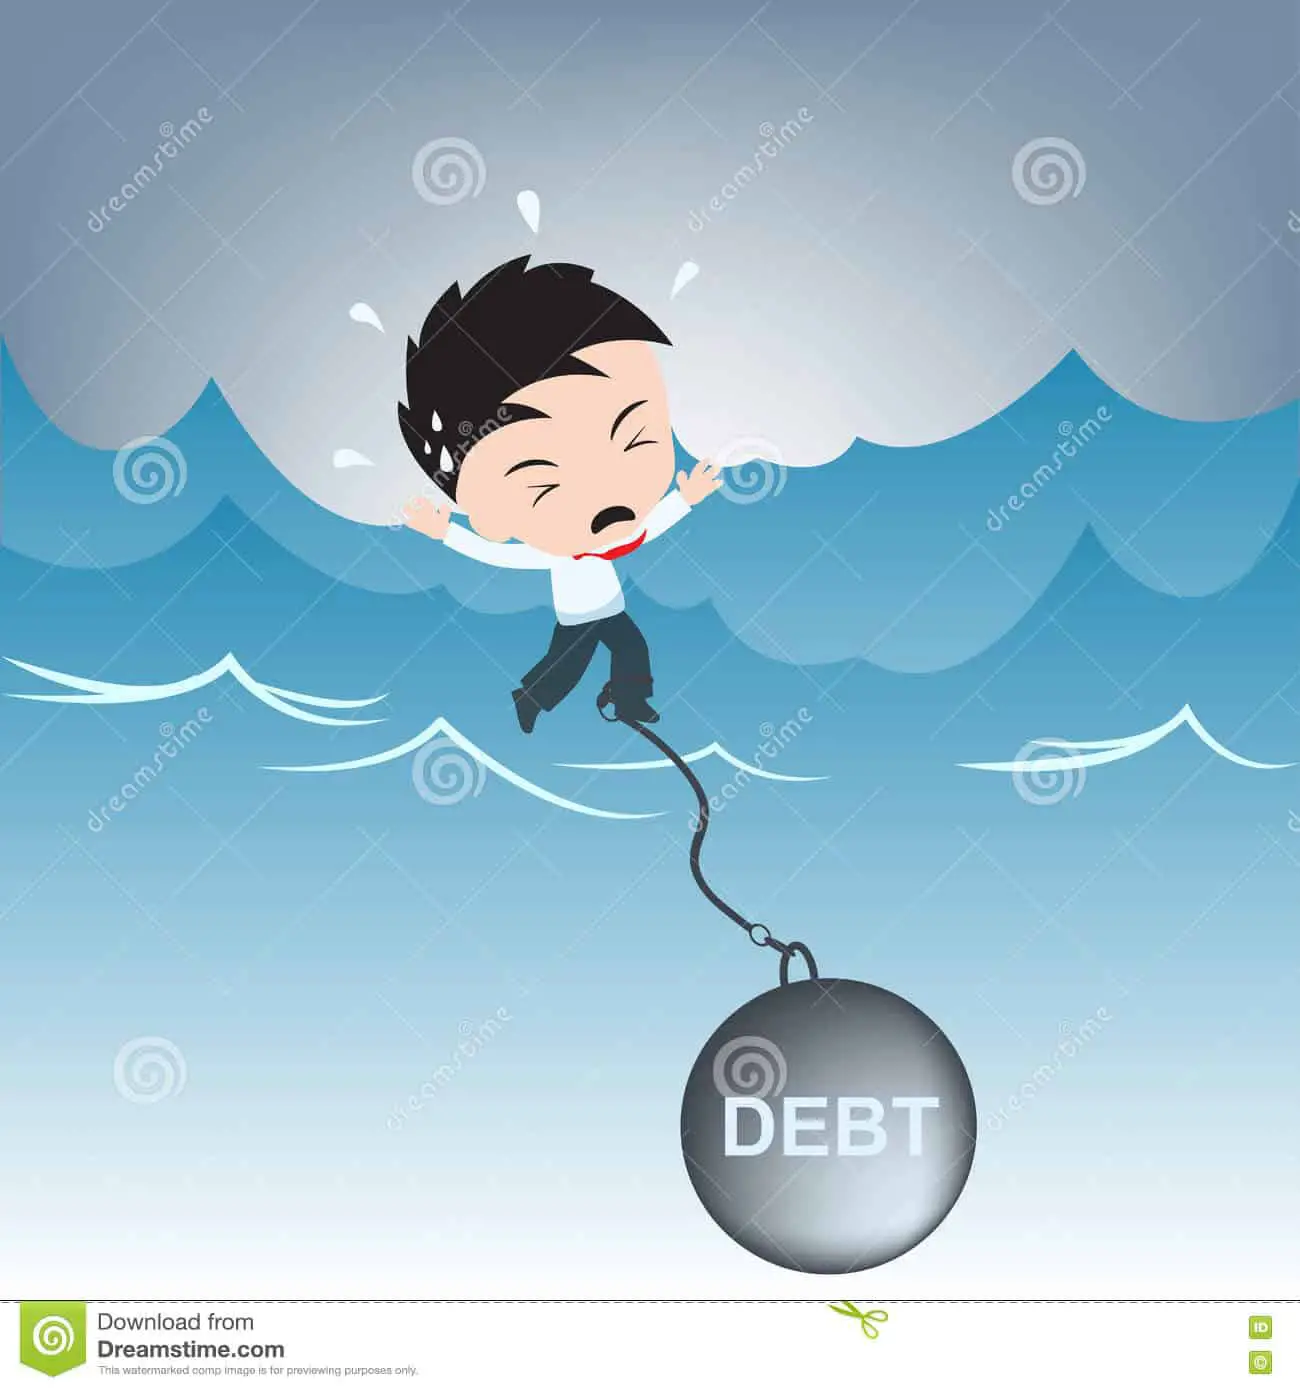 Businessman Need Help With Debt Burden On Water, Financial Concept ...